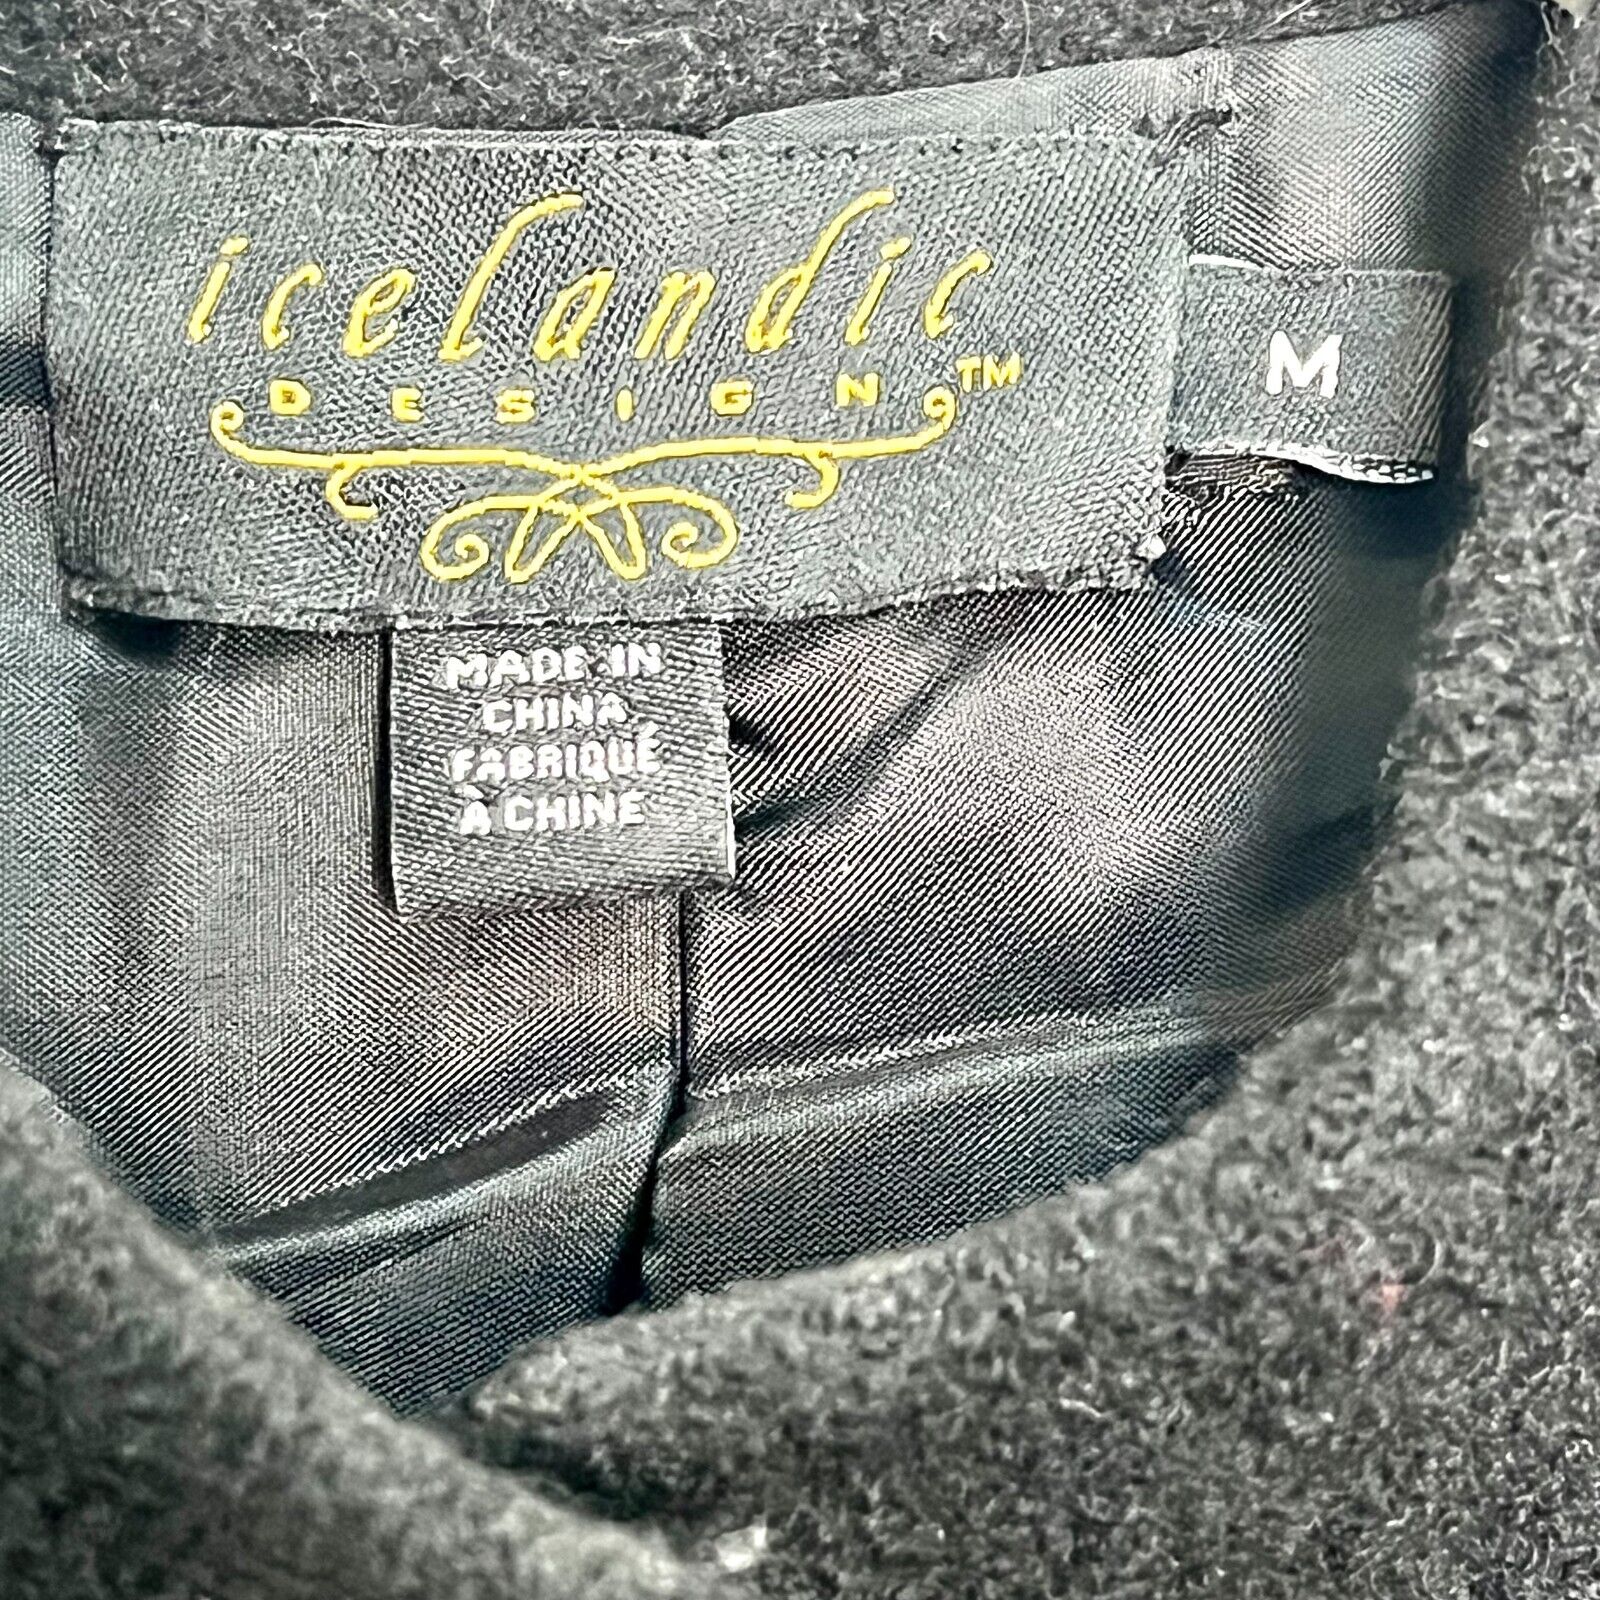 Icelandic Design Black Floral Vest Size Medium